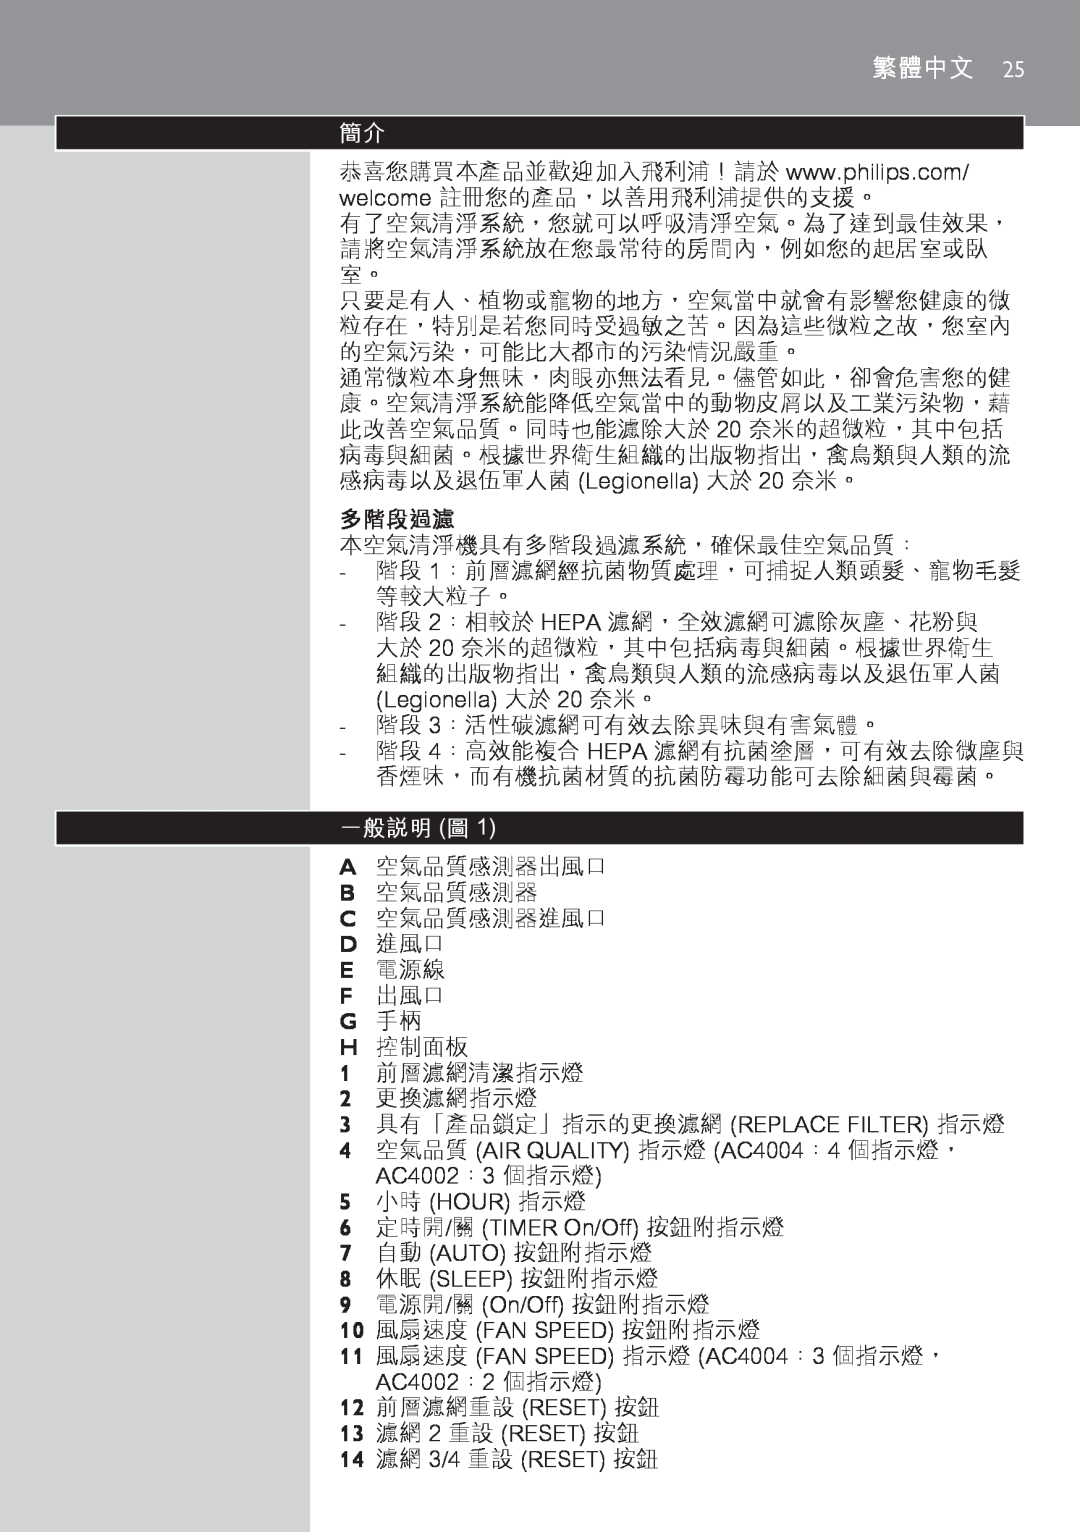 Philips AC4002 manual 多階段過濾, 一般說明 圖 1, 繁體中文 